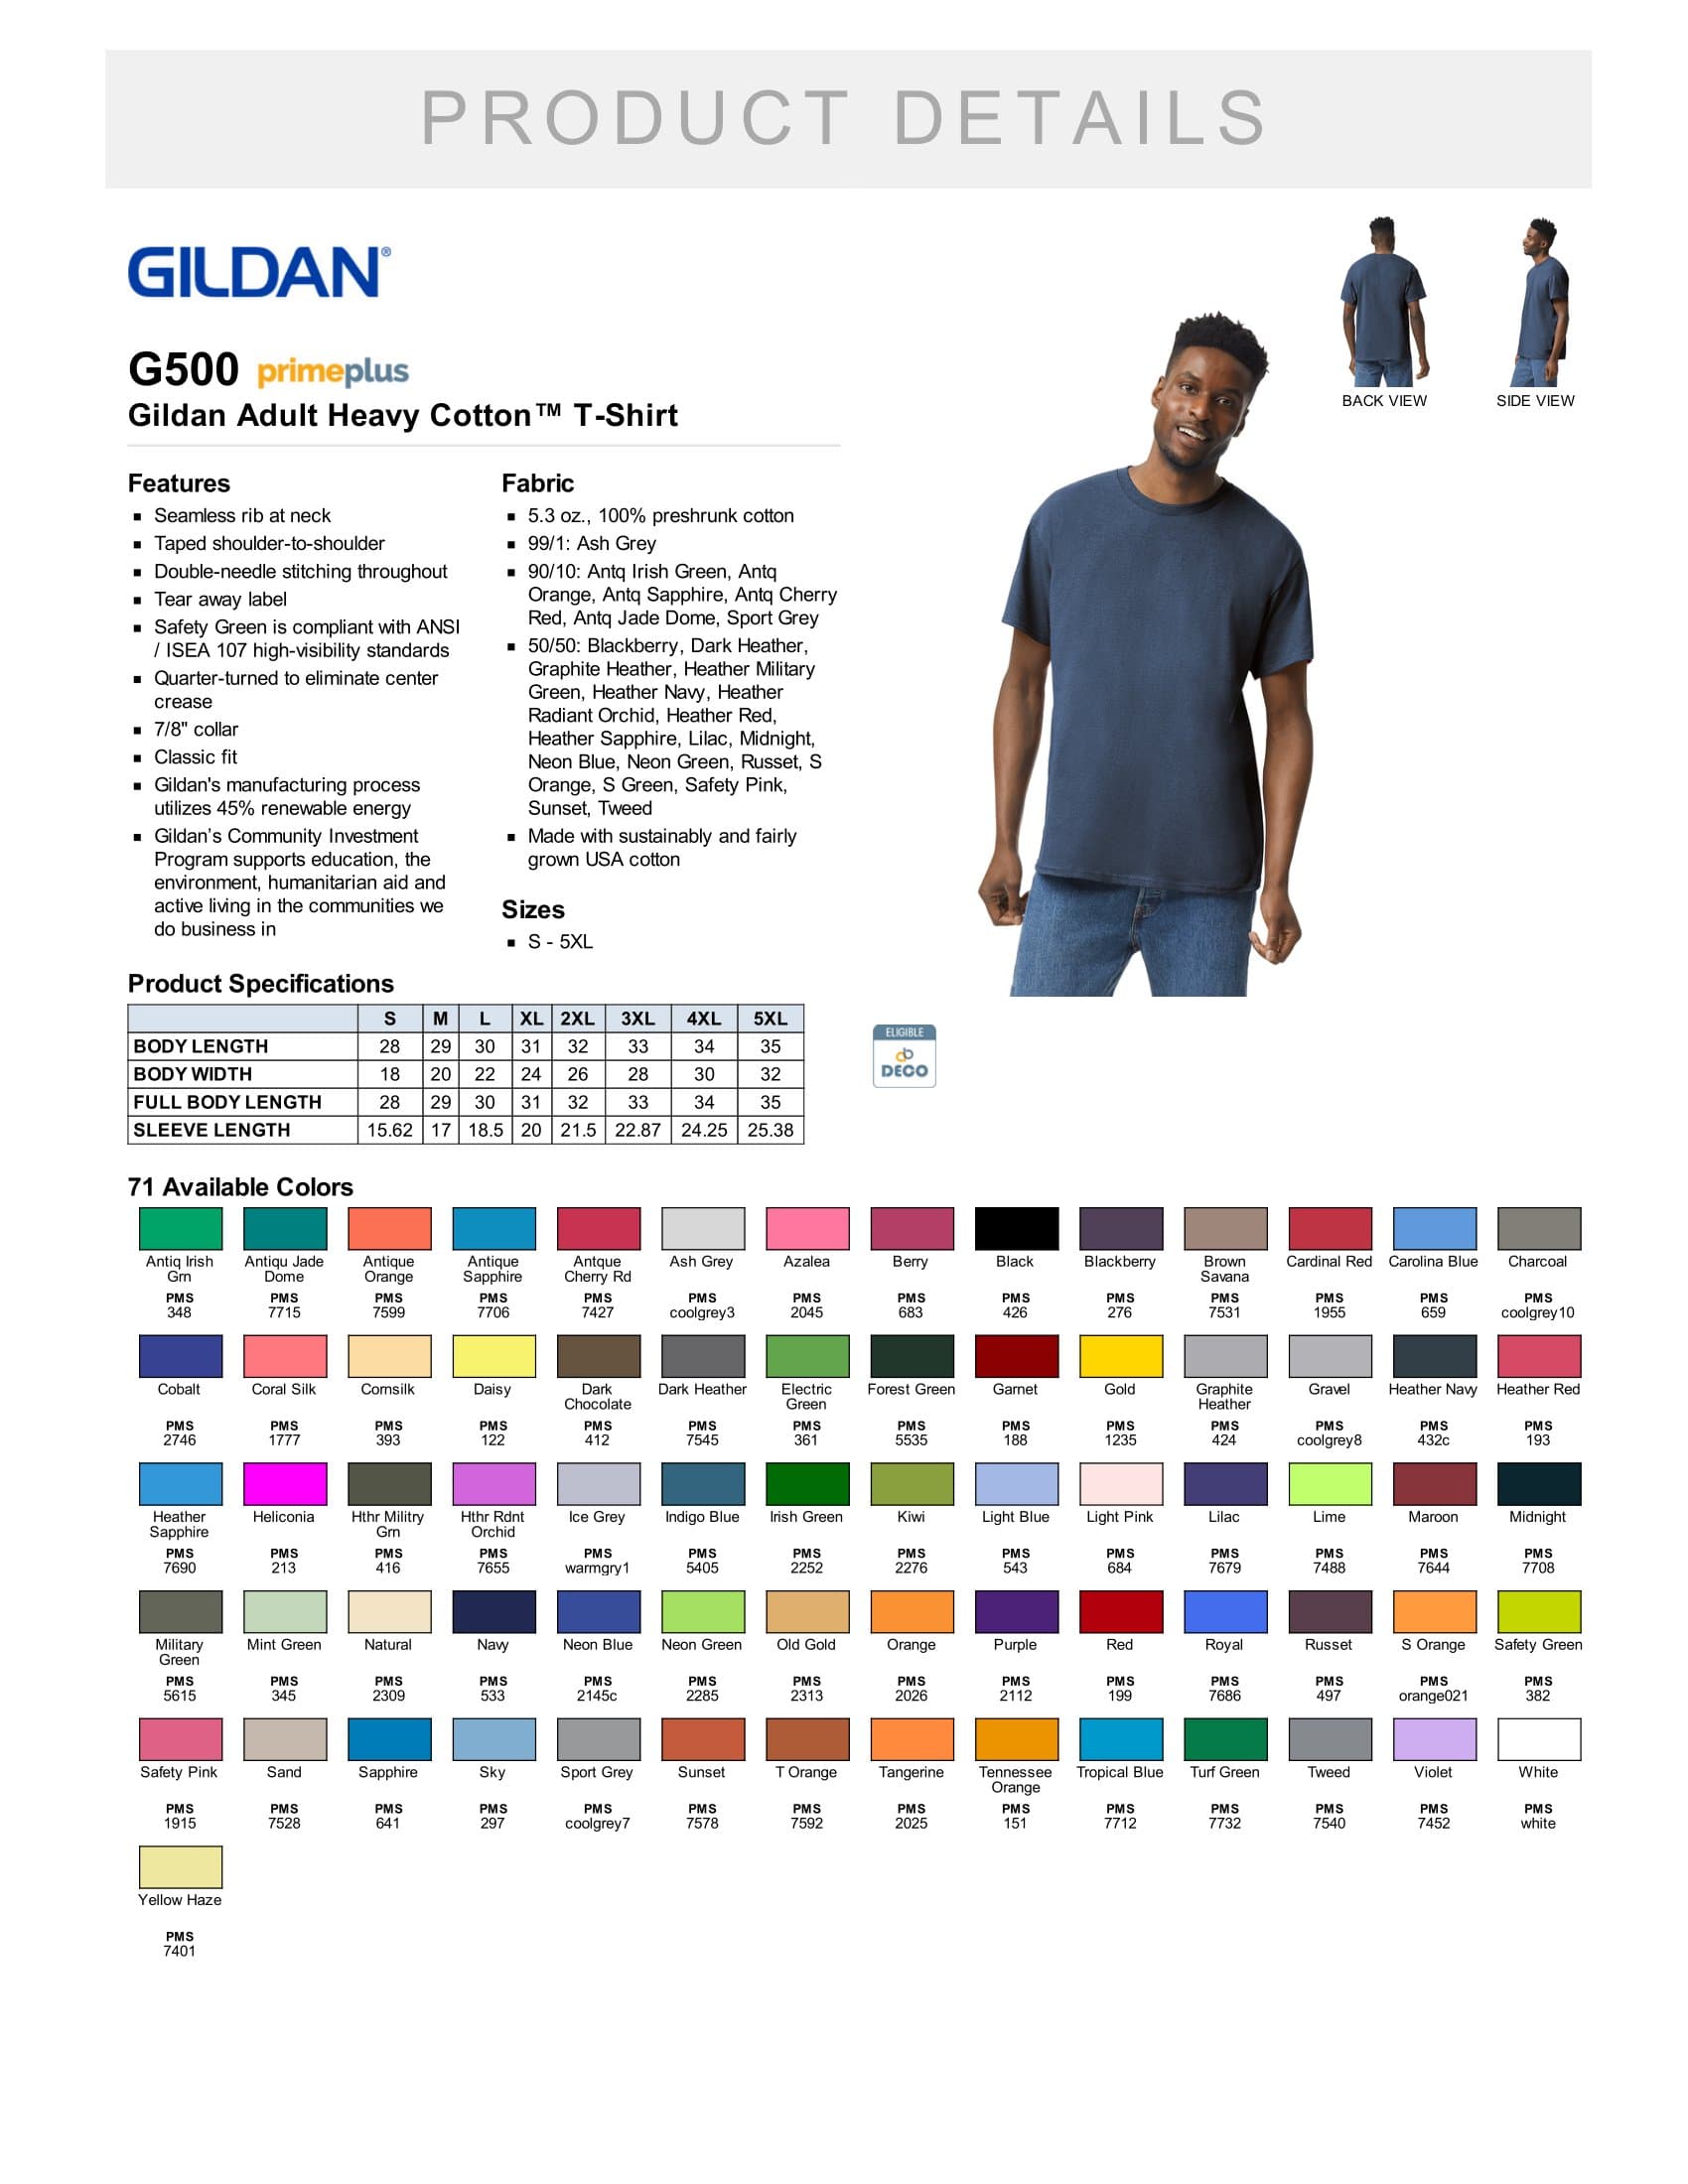 Gildan G500 